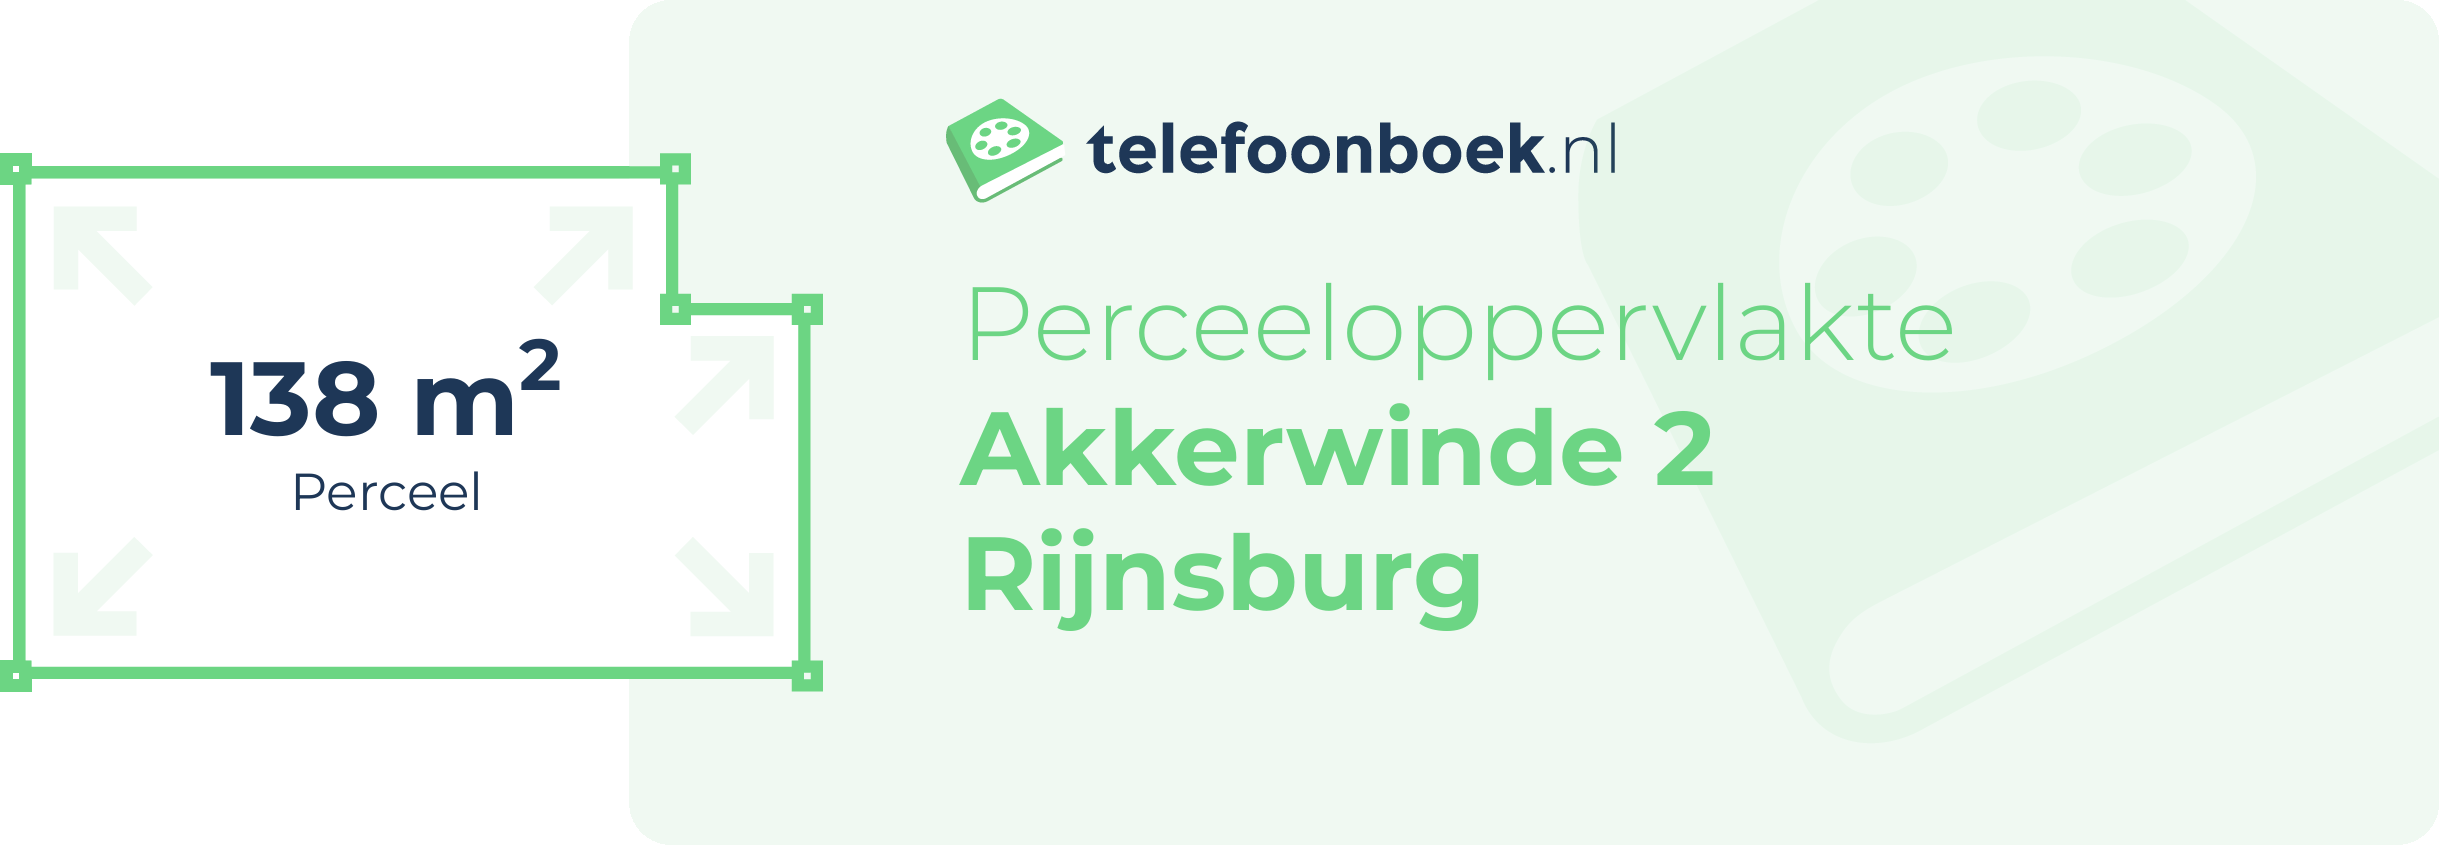 Perceeloppervlakte Akkerwinde 2 Rijnsburg